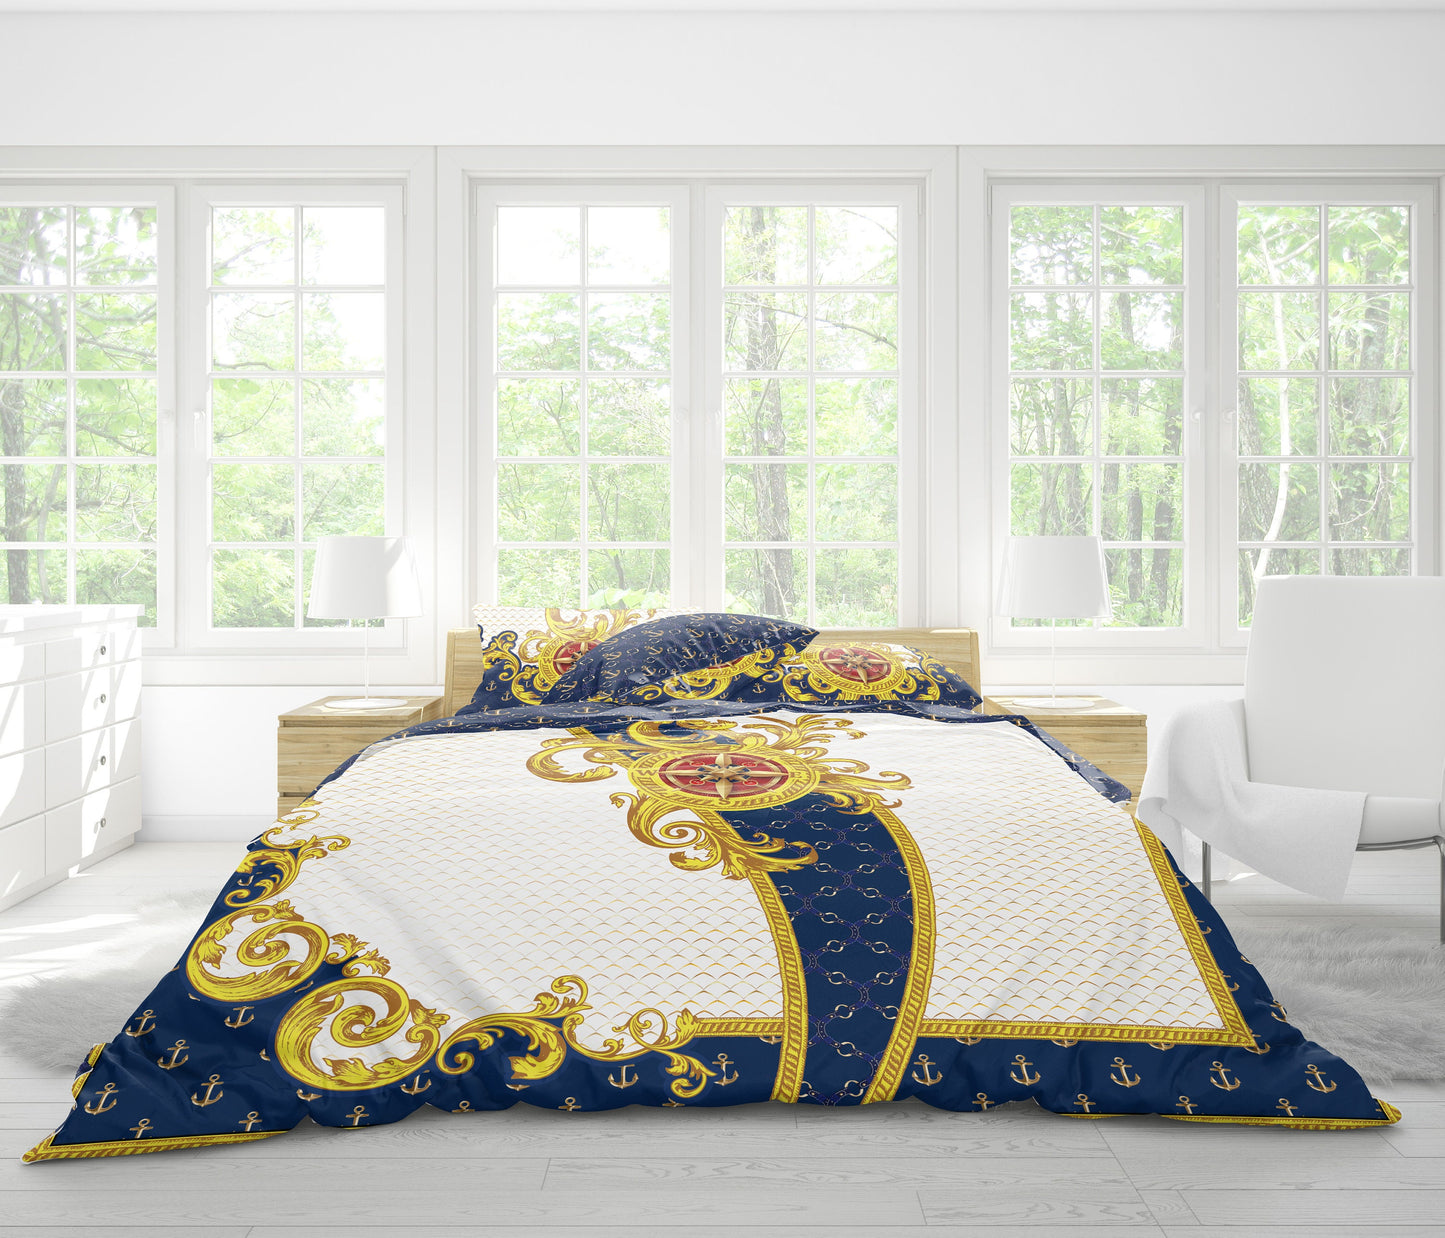 Marine Baroque Blue Yellow White Personalised design Bedding set • Reversible design • Cotton • microfiber • AU, EU, USA, queen, king